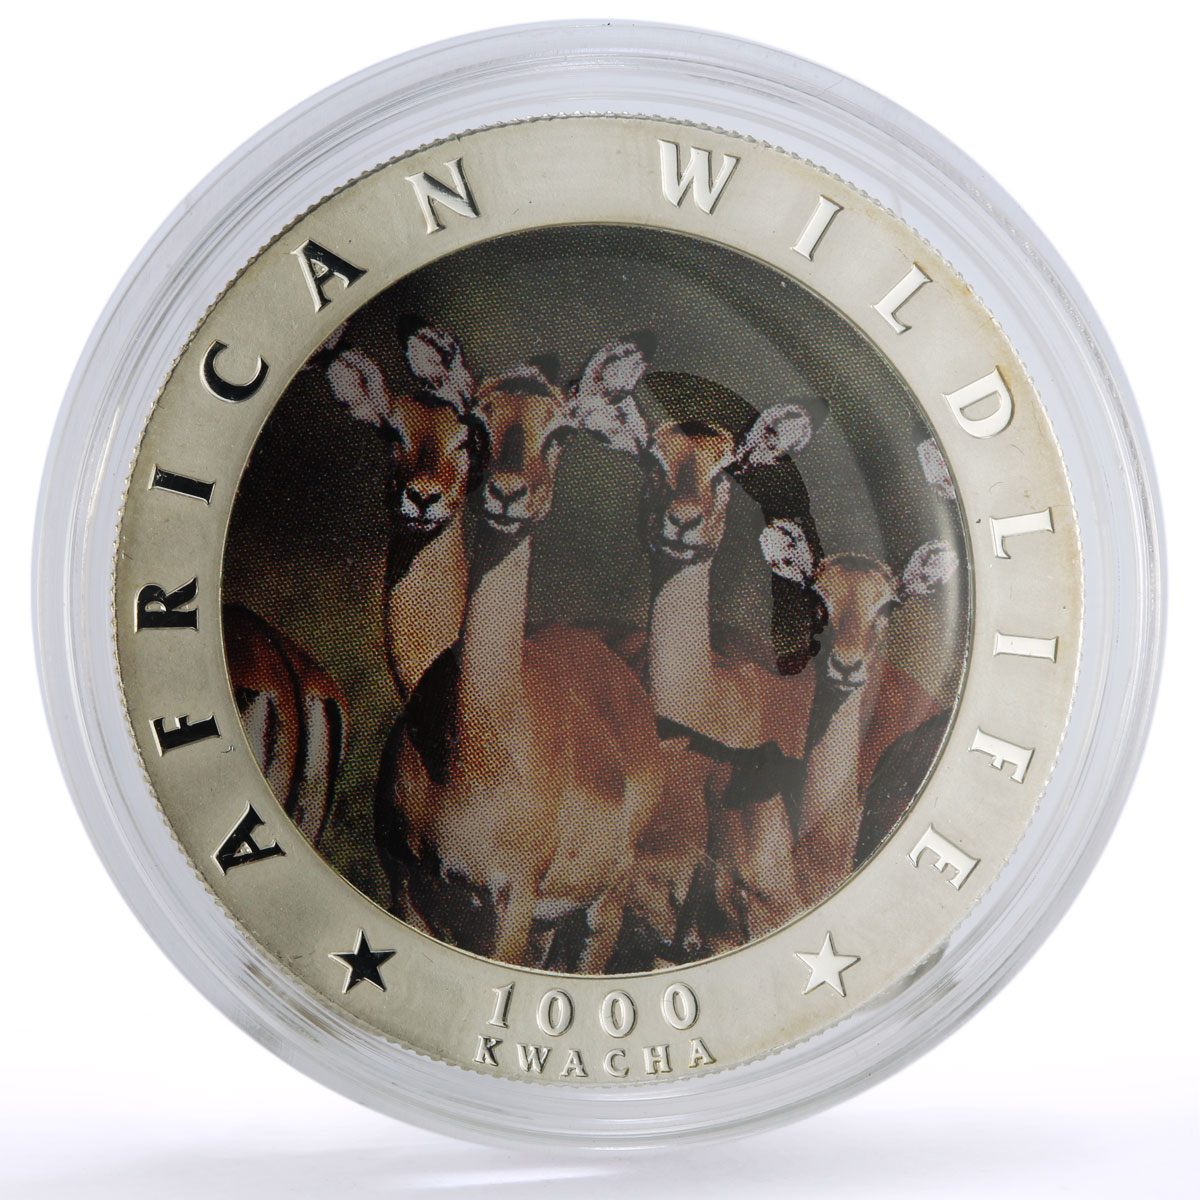 Zambia 1000 kwacha Conservation Wildlife Okapi Johnson Fauna silver coin 2000